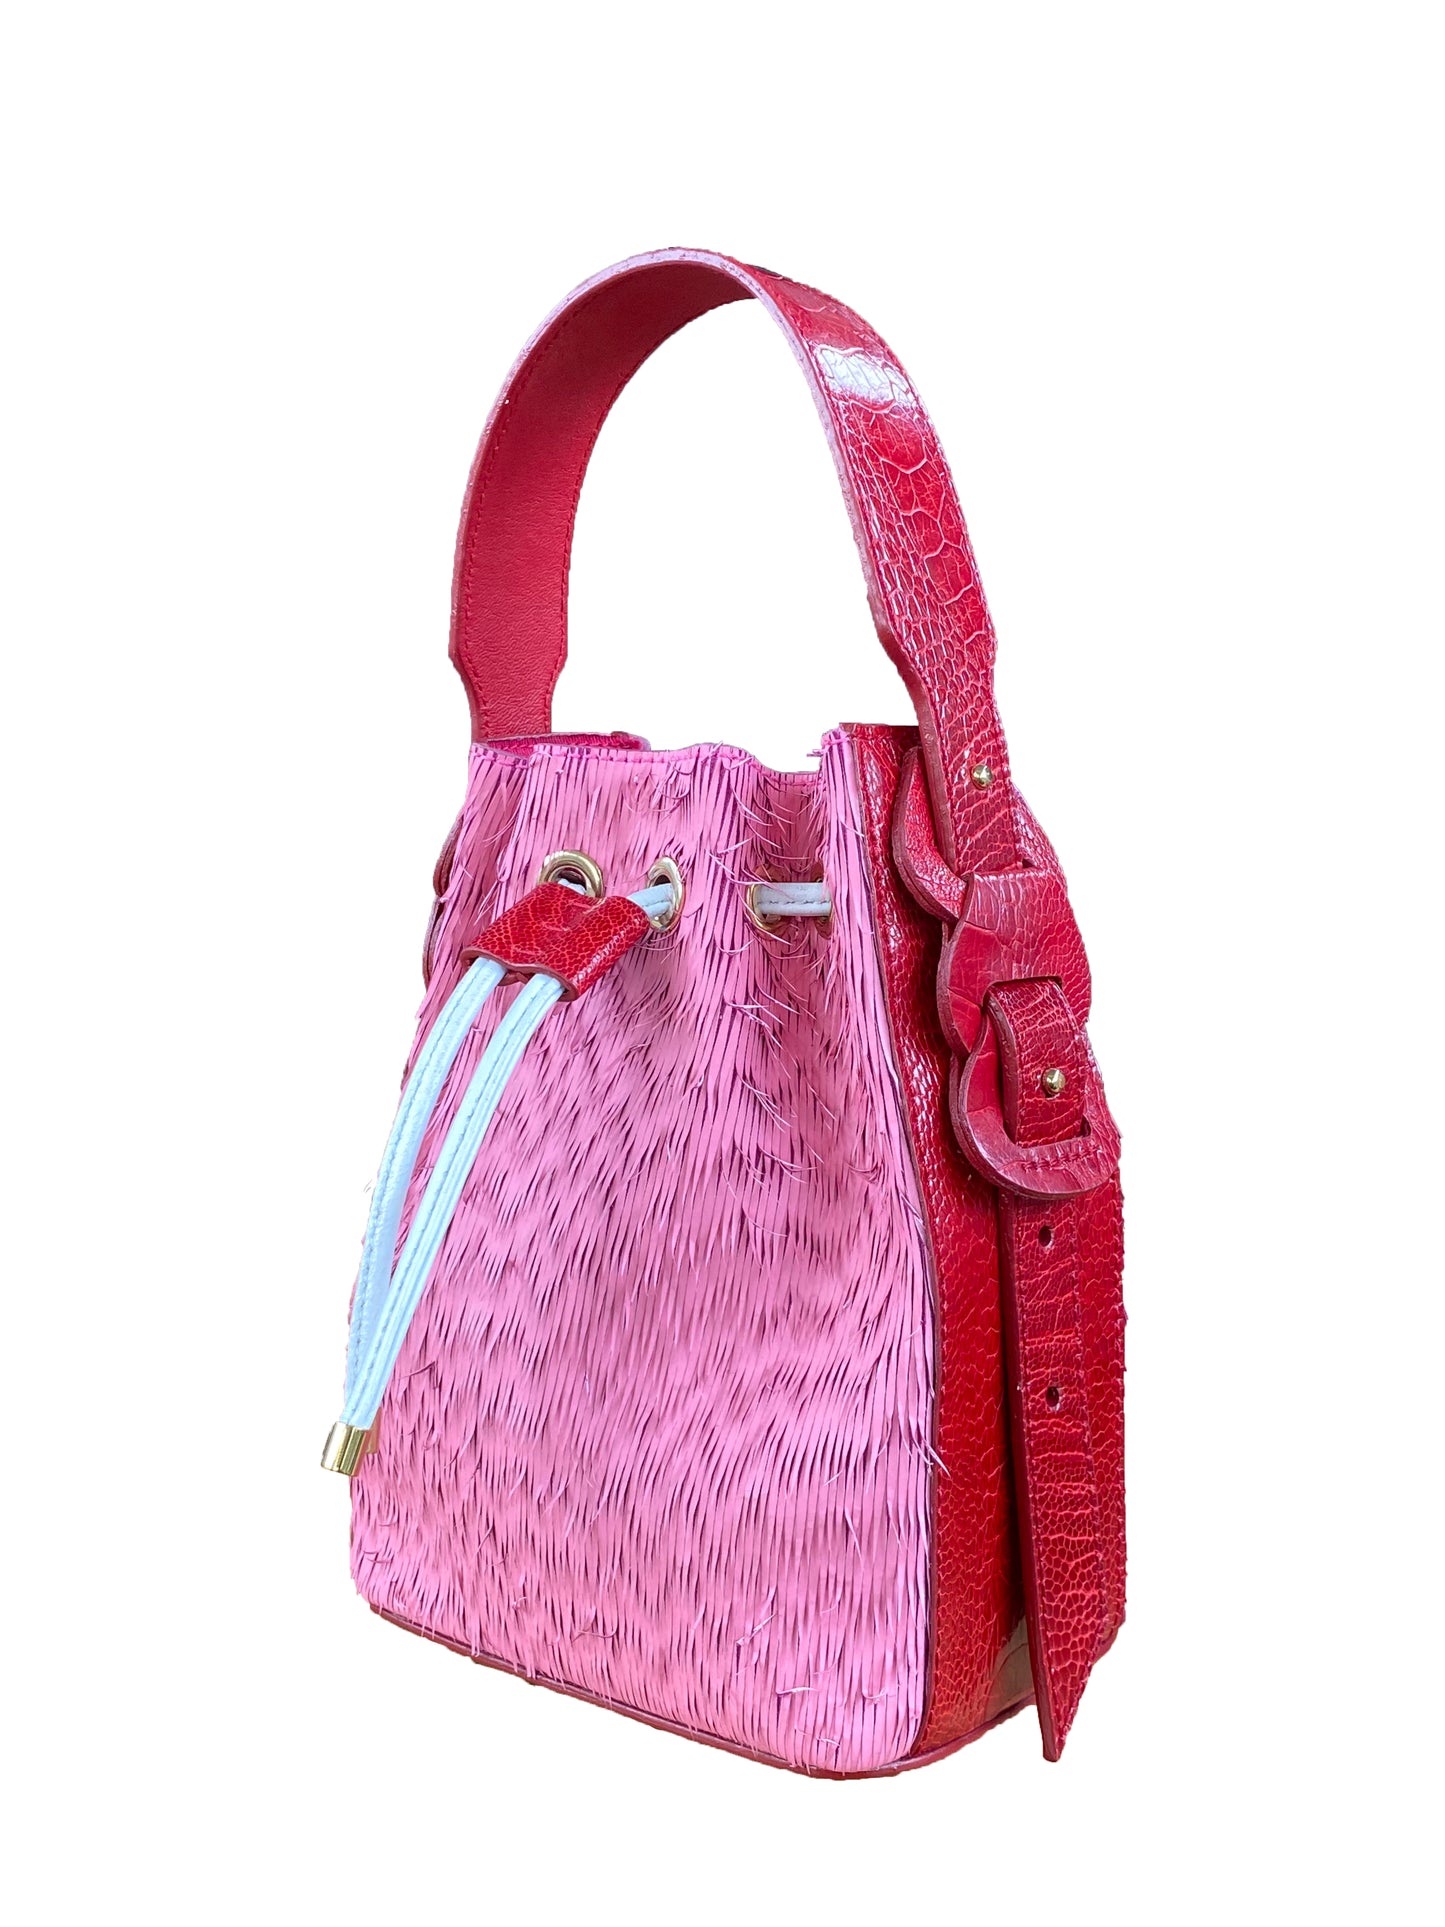 Artisanal 'Trixie' Drawstring bag in Deadstock Leather